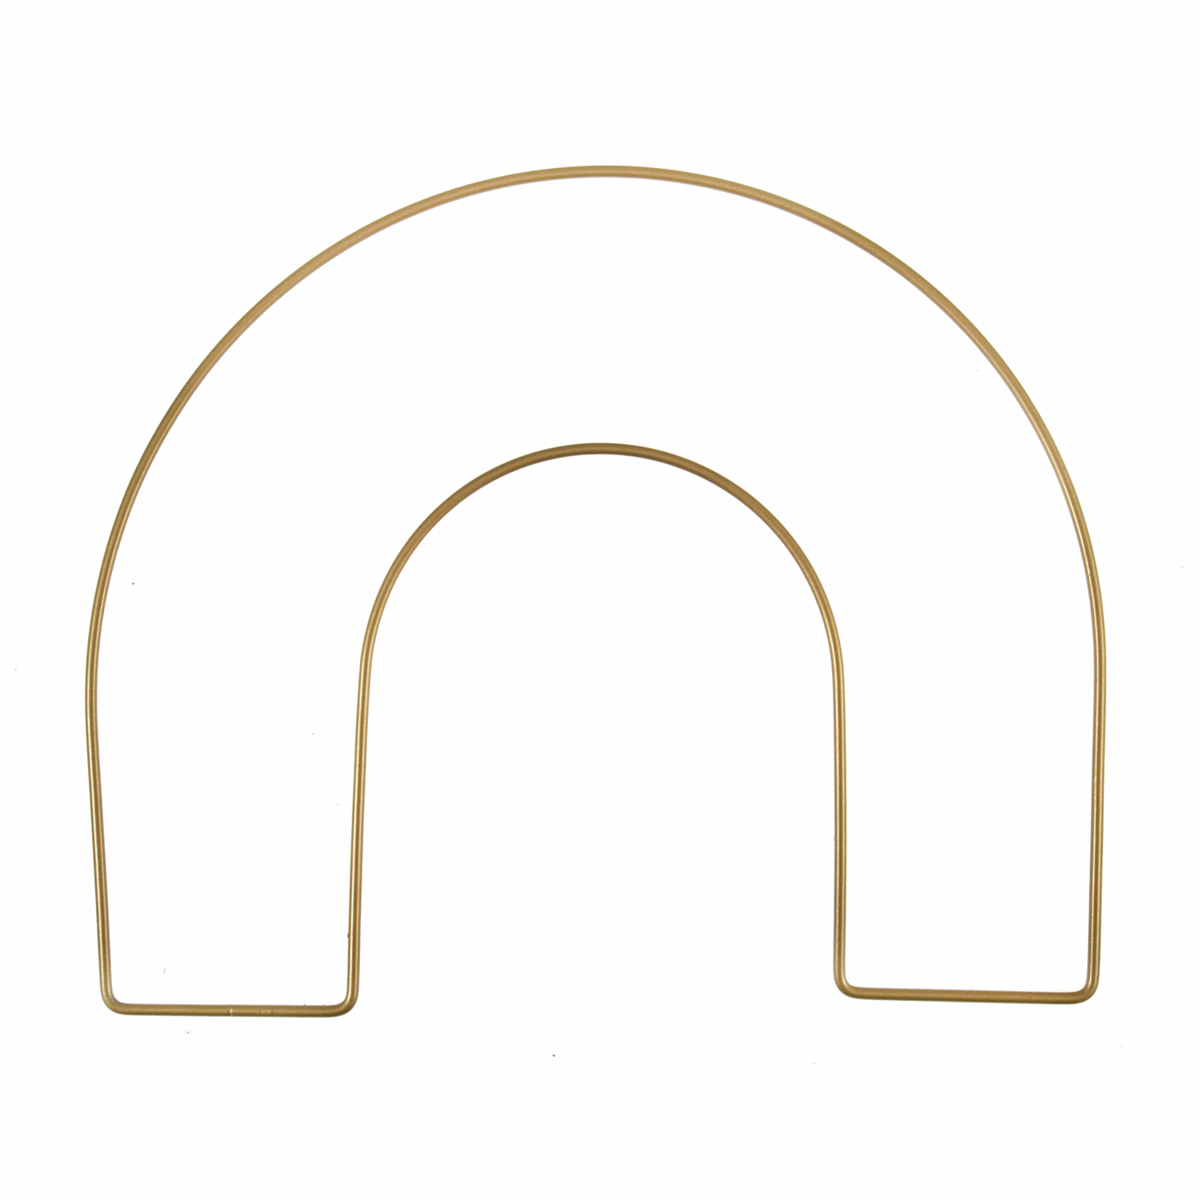 Trimits Accessories Trimits Metal Craft Hoops - Gold Rainbow 5022306796406